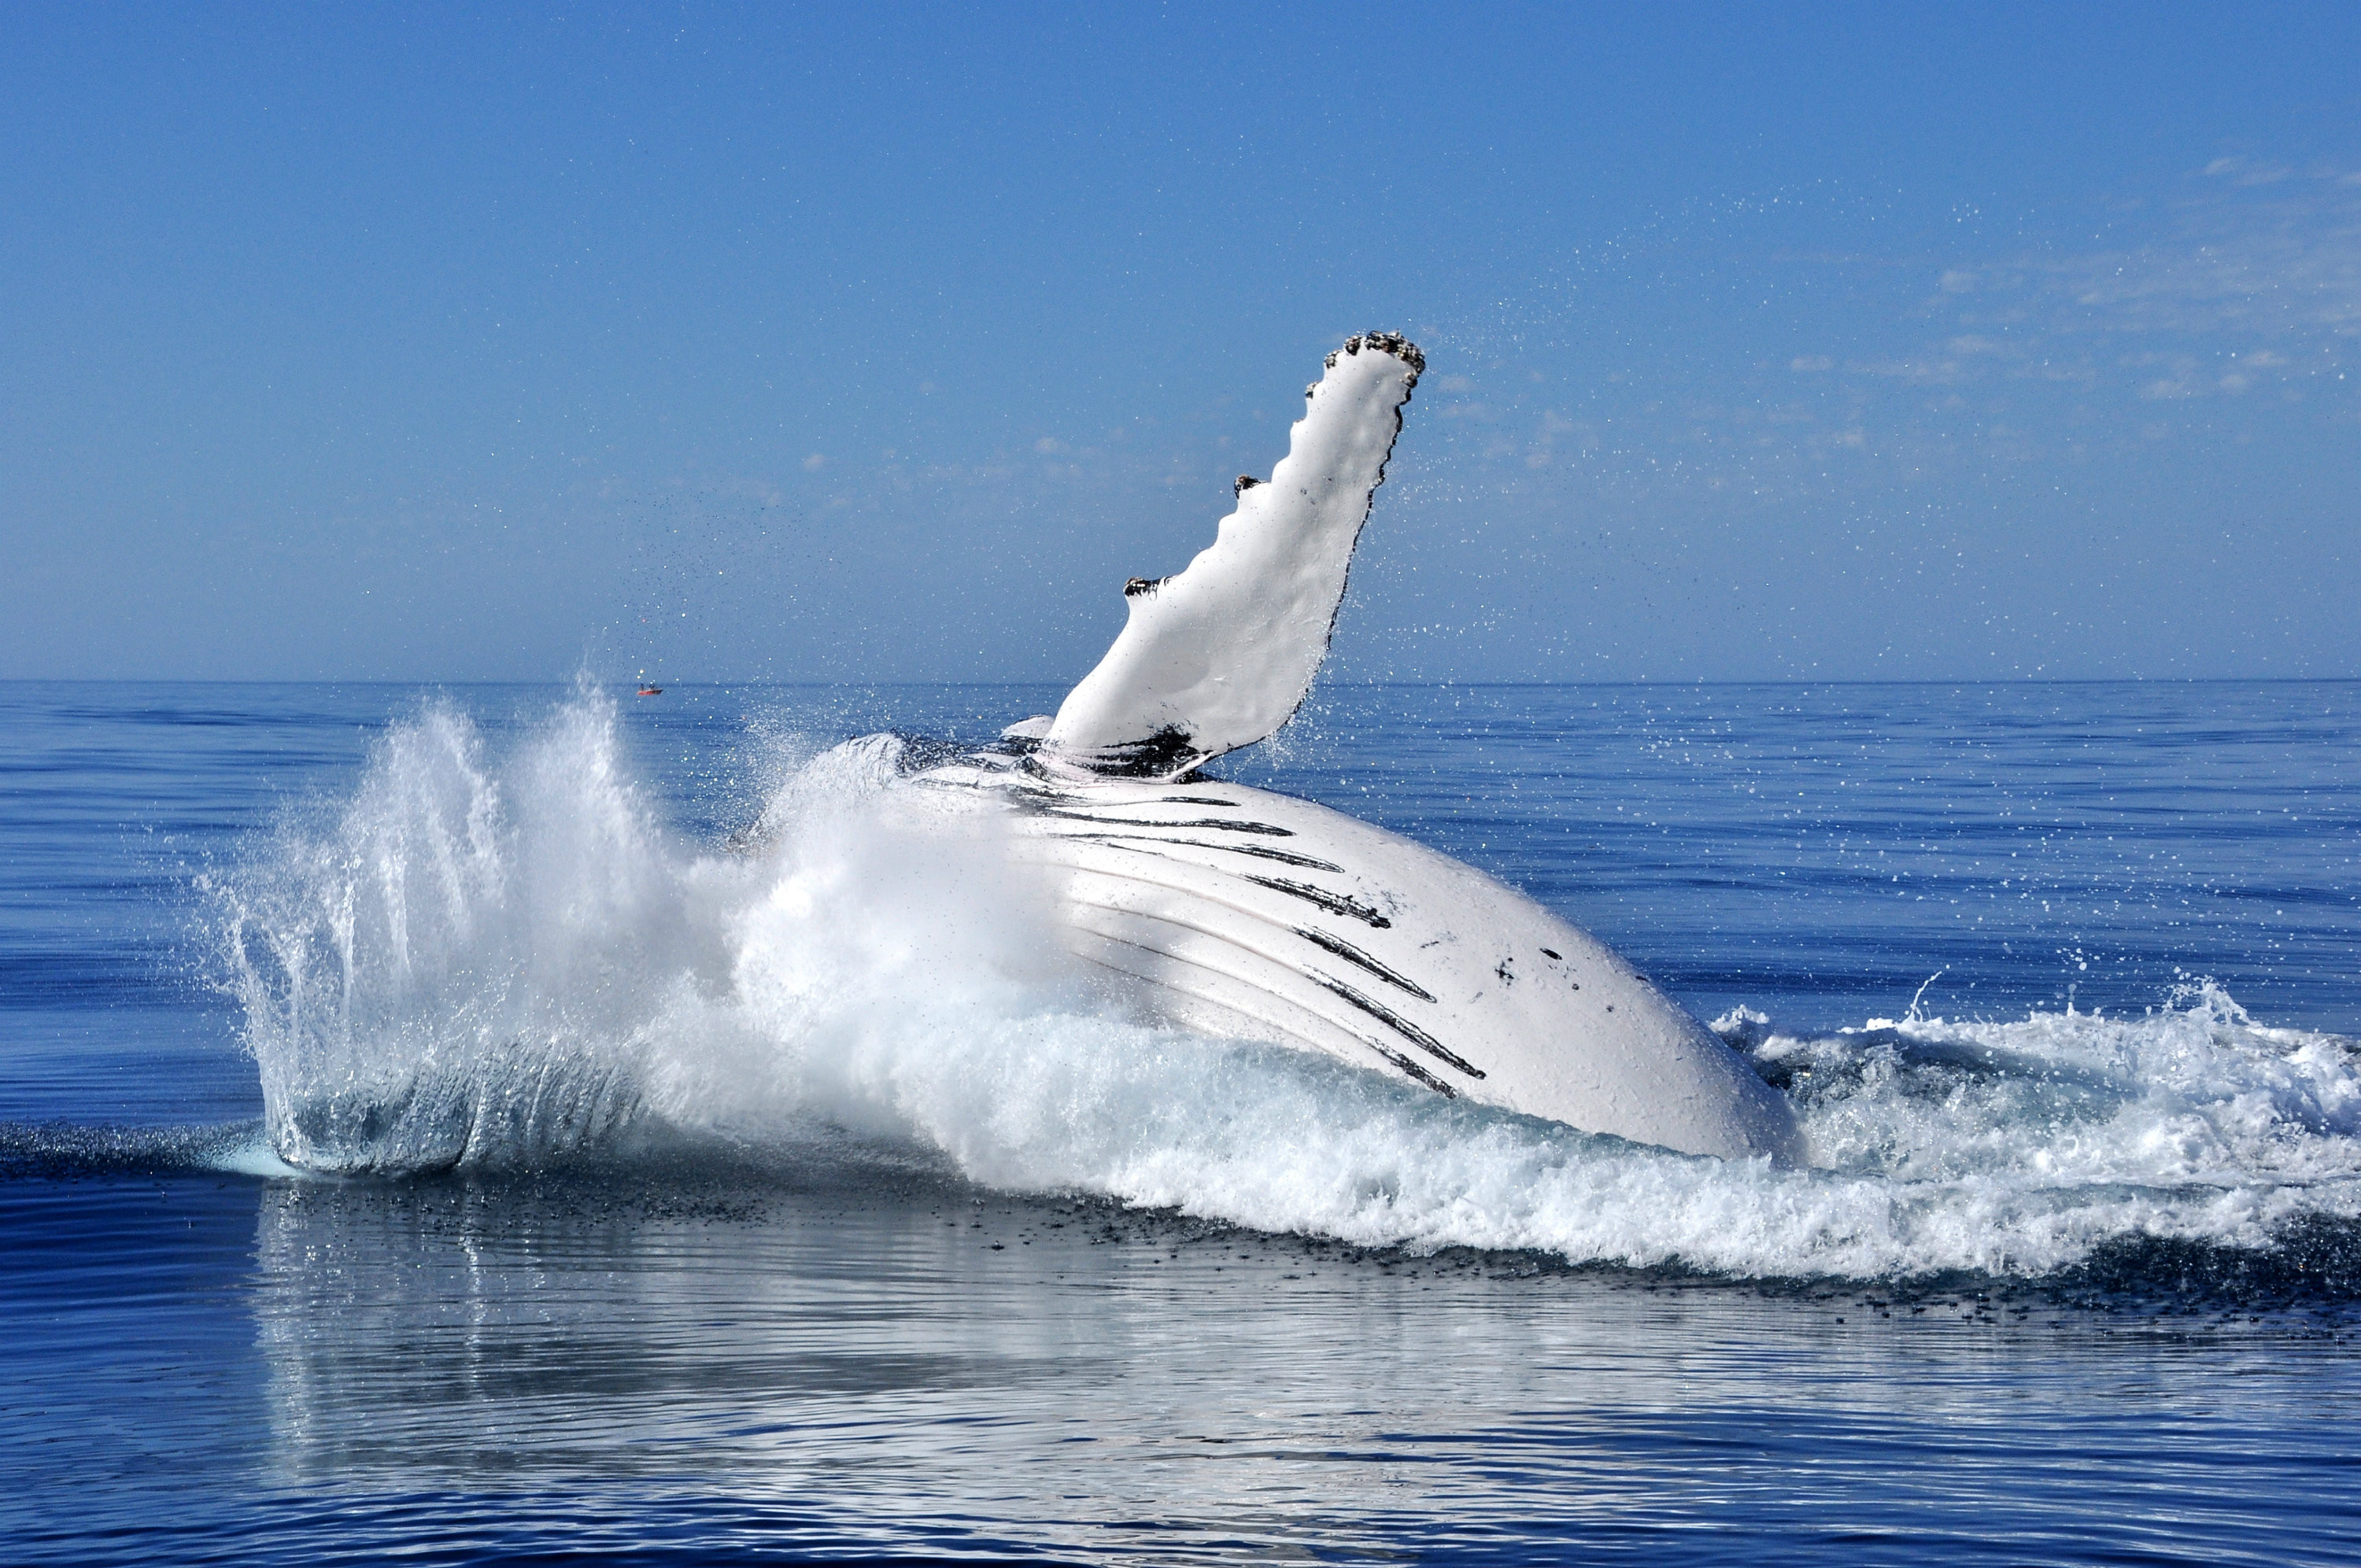 Welcome to Western Australia's Whale Watching Season